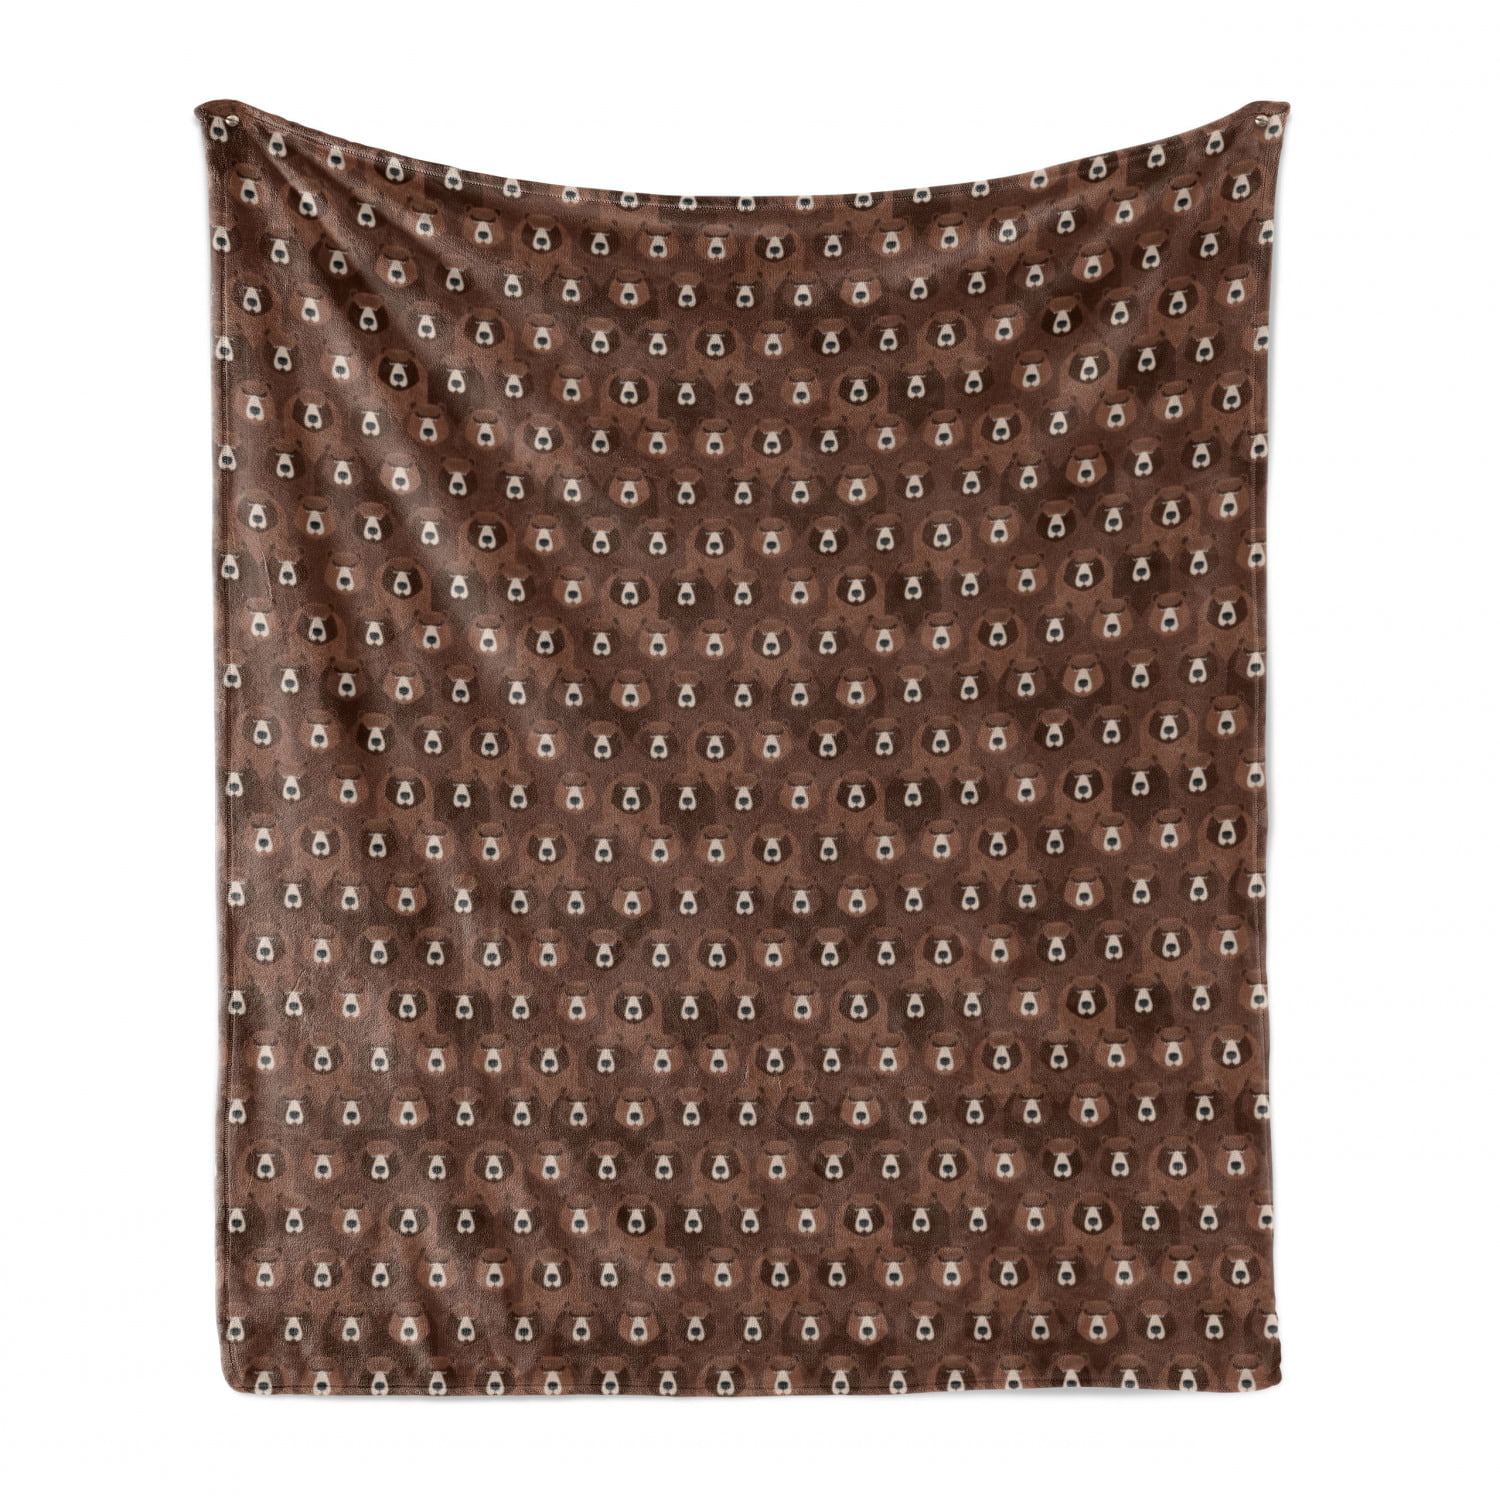 CHOCOLATE BROWN  WHITE POLKA DOT FLEECE THROW Blanket 50 x 60 ULTRA SOFT 